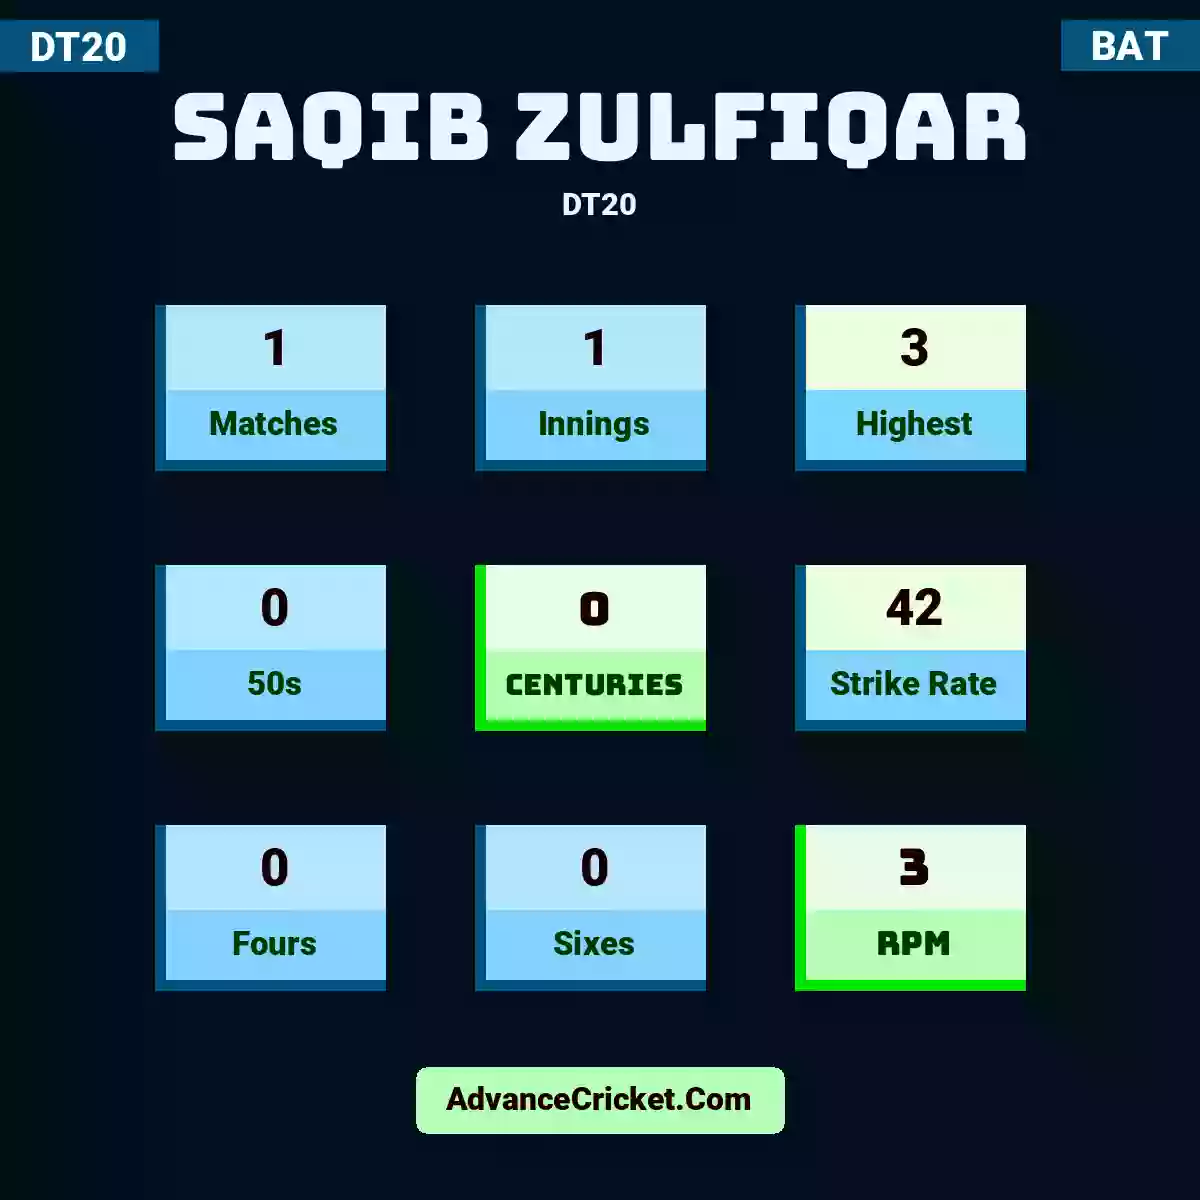 Saqib Zulfiqar DT20 , Saqib Zulfiqar played 1 matches, scored 3 runs as highest, 0 half-centuries, and 0 centuries, with a strike rate of 42. S.Zulfiqar hit 0 fours and 0 sixes, with an RPM of 3.